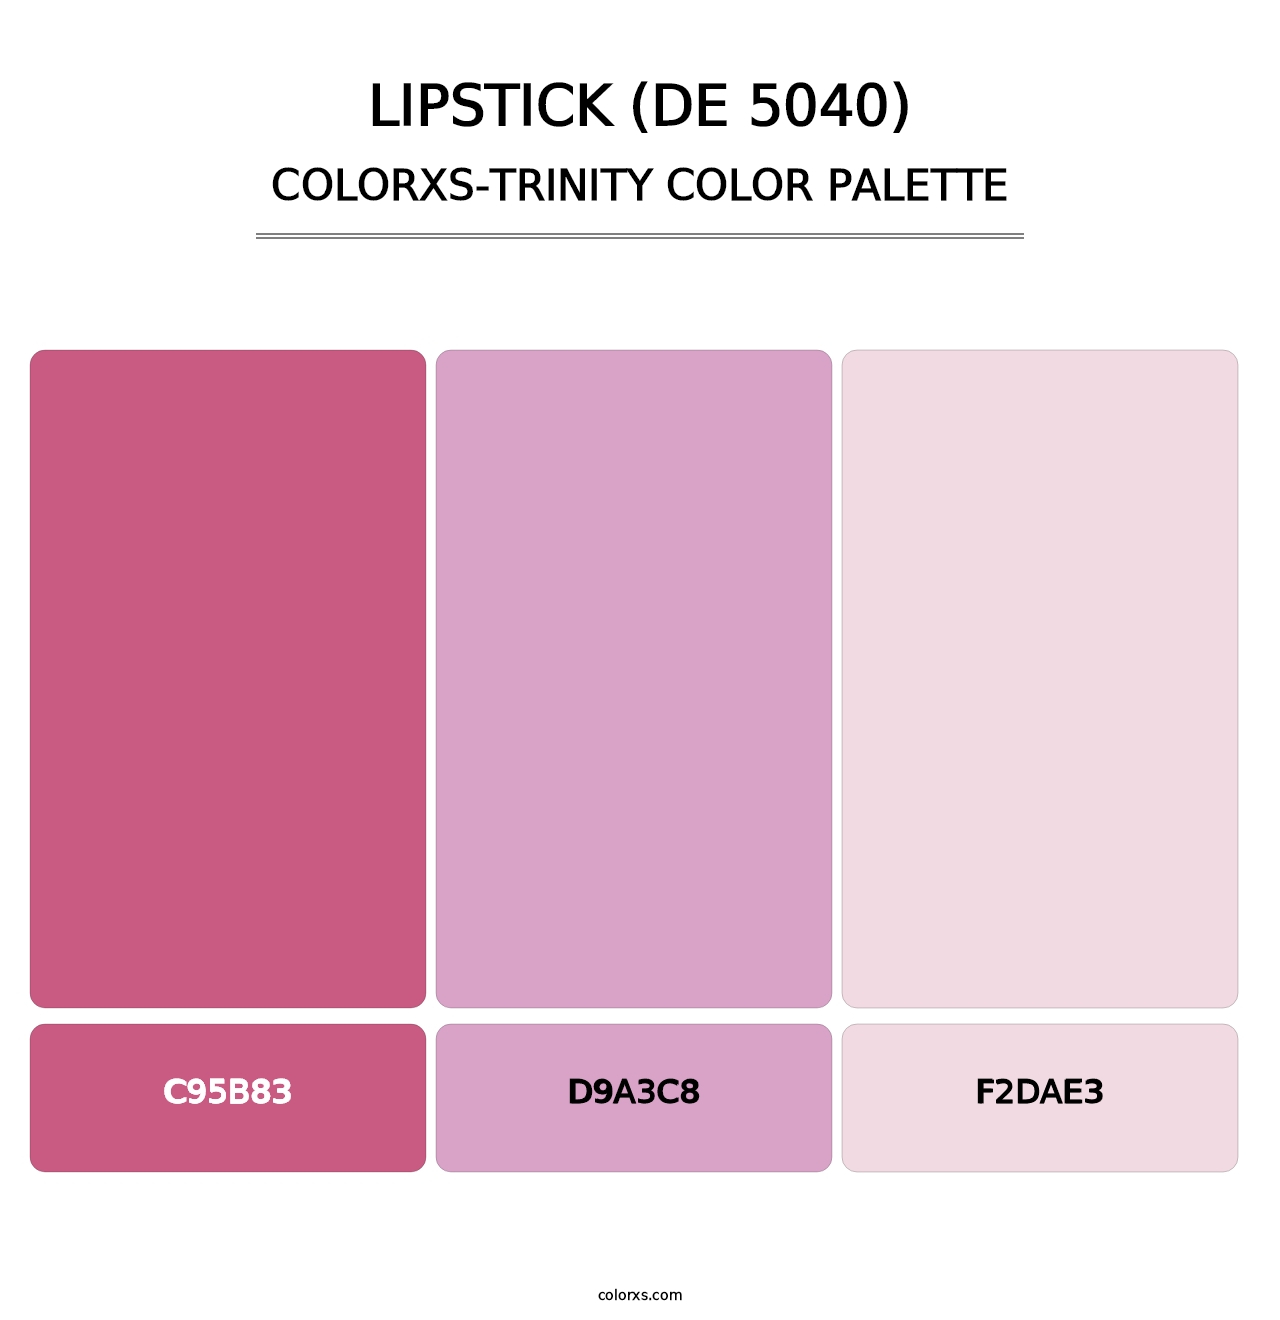 Lipstick (DE 5040) - Colorxs Trinity Palette